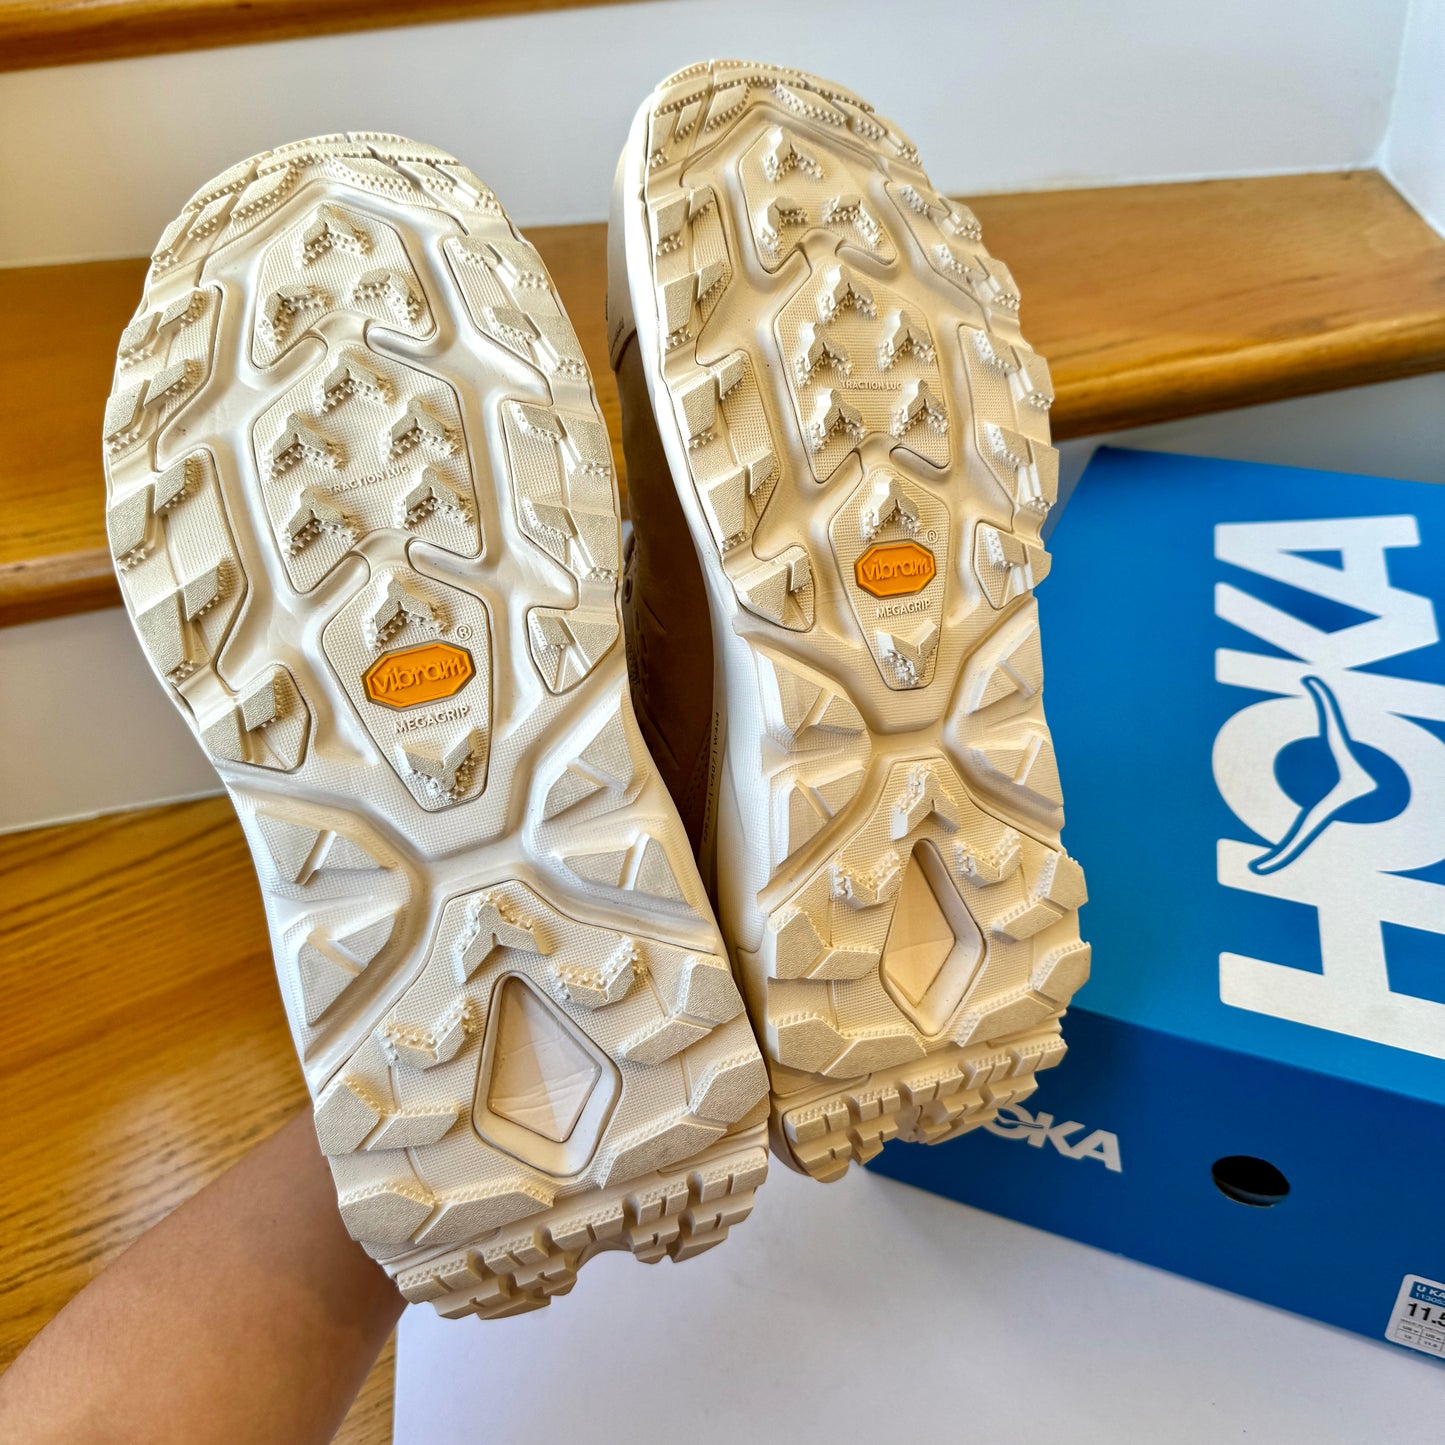 Hoka Kaha 2 GTX Low Hiking Boots Waterproof Gore Tex Shifting Sand Eggnog